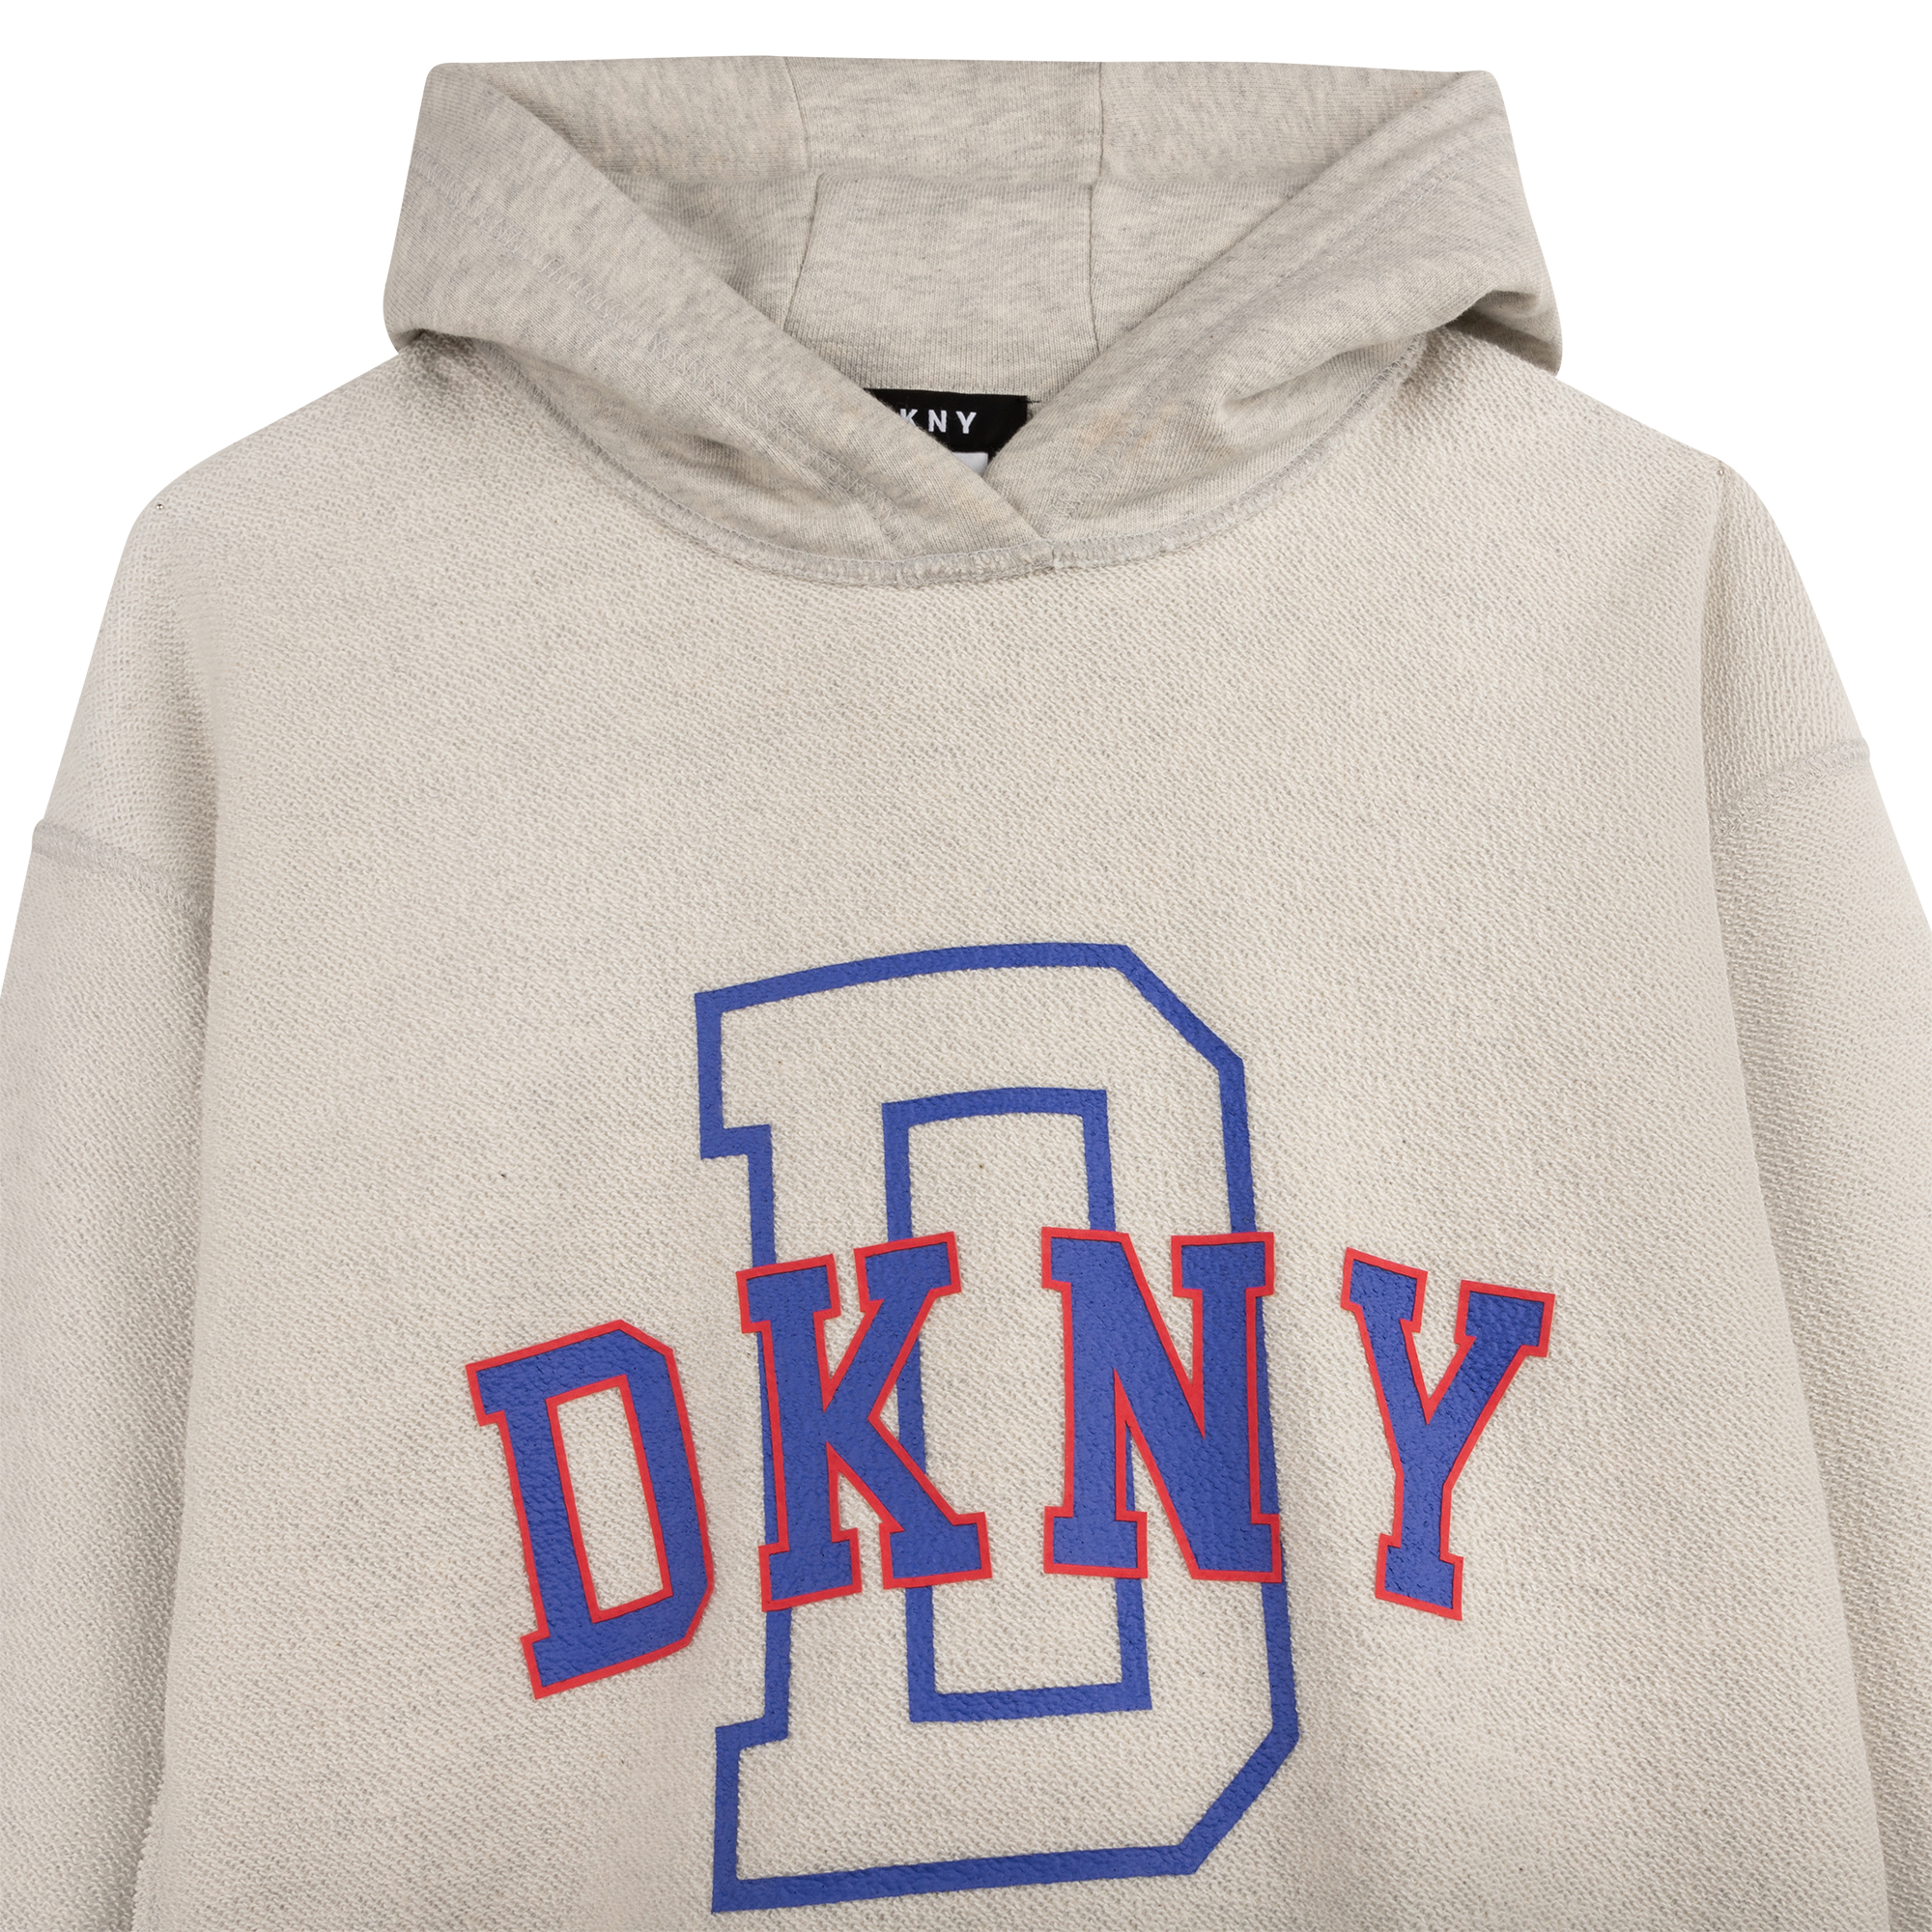 Keerbare sweater met capuchon DKNY Voor